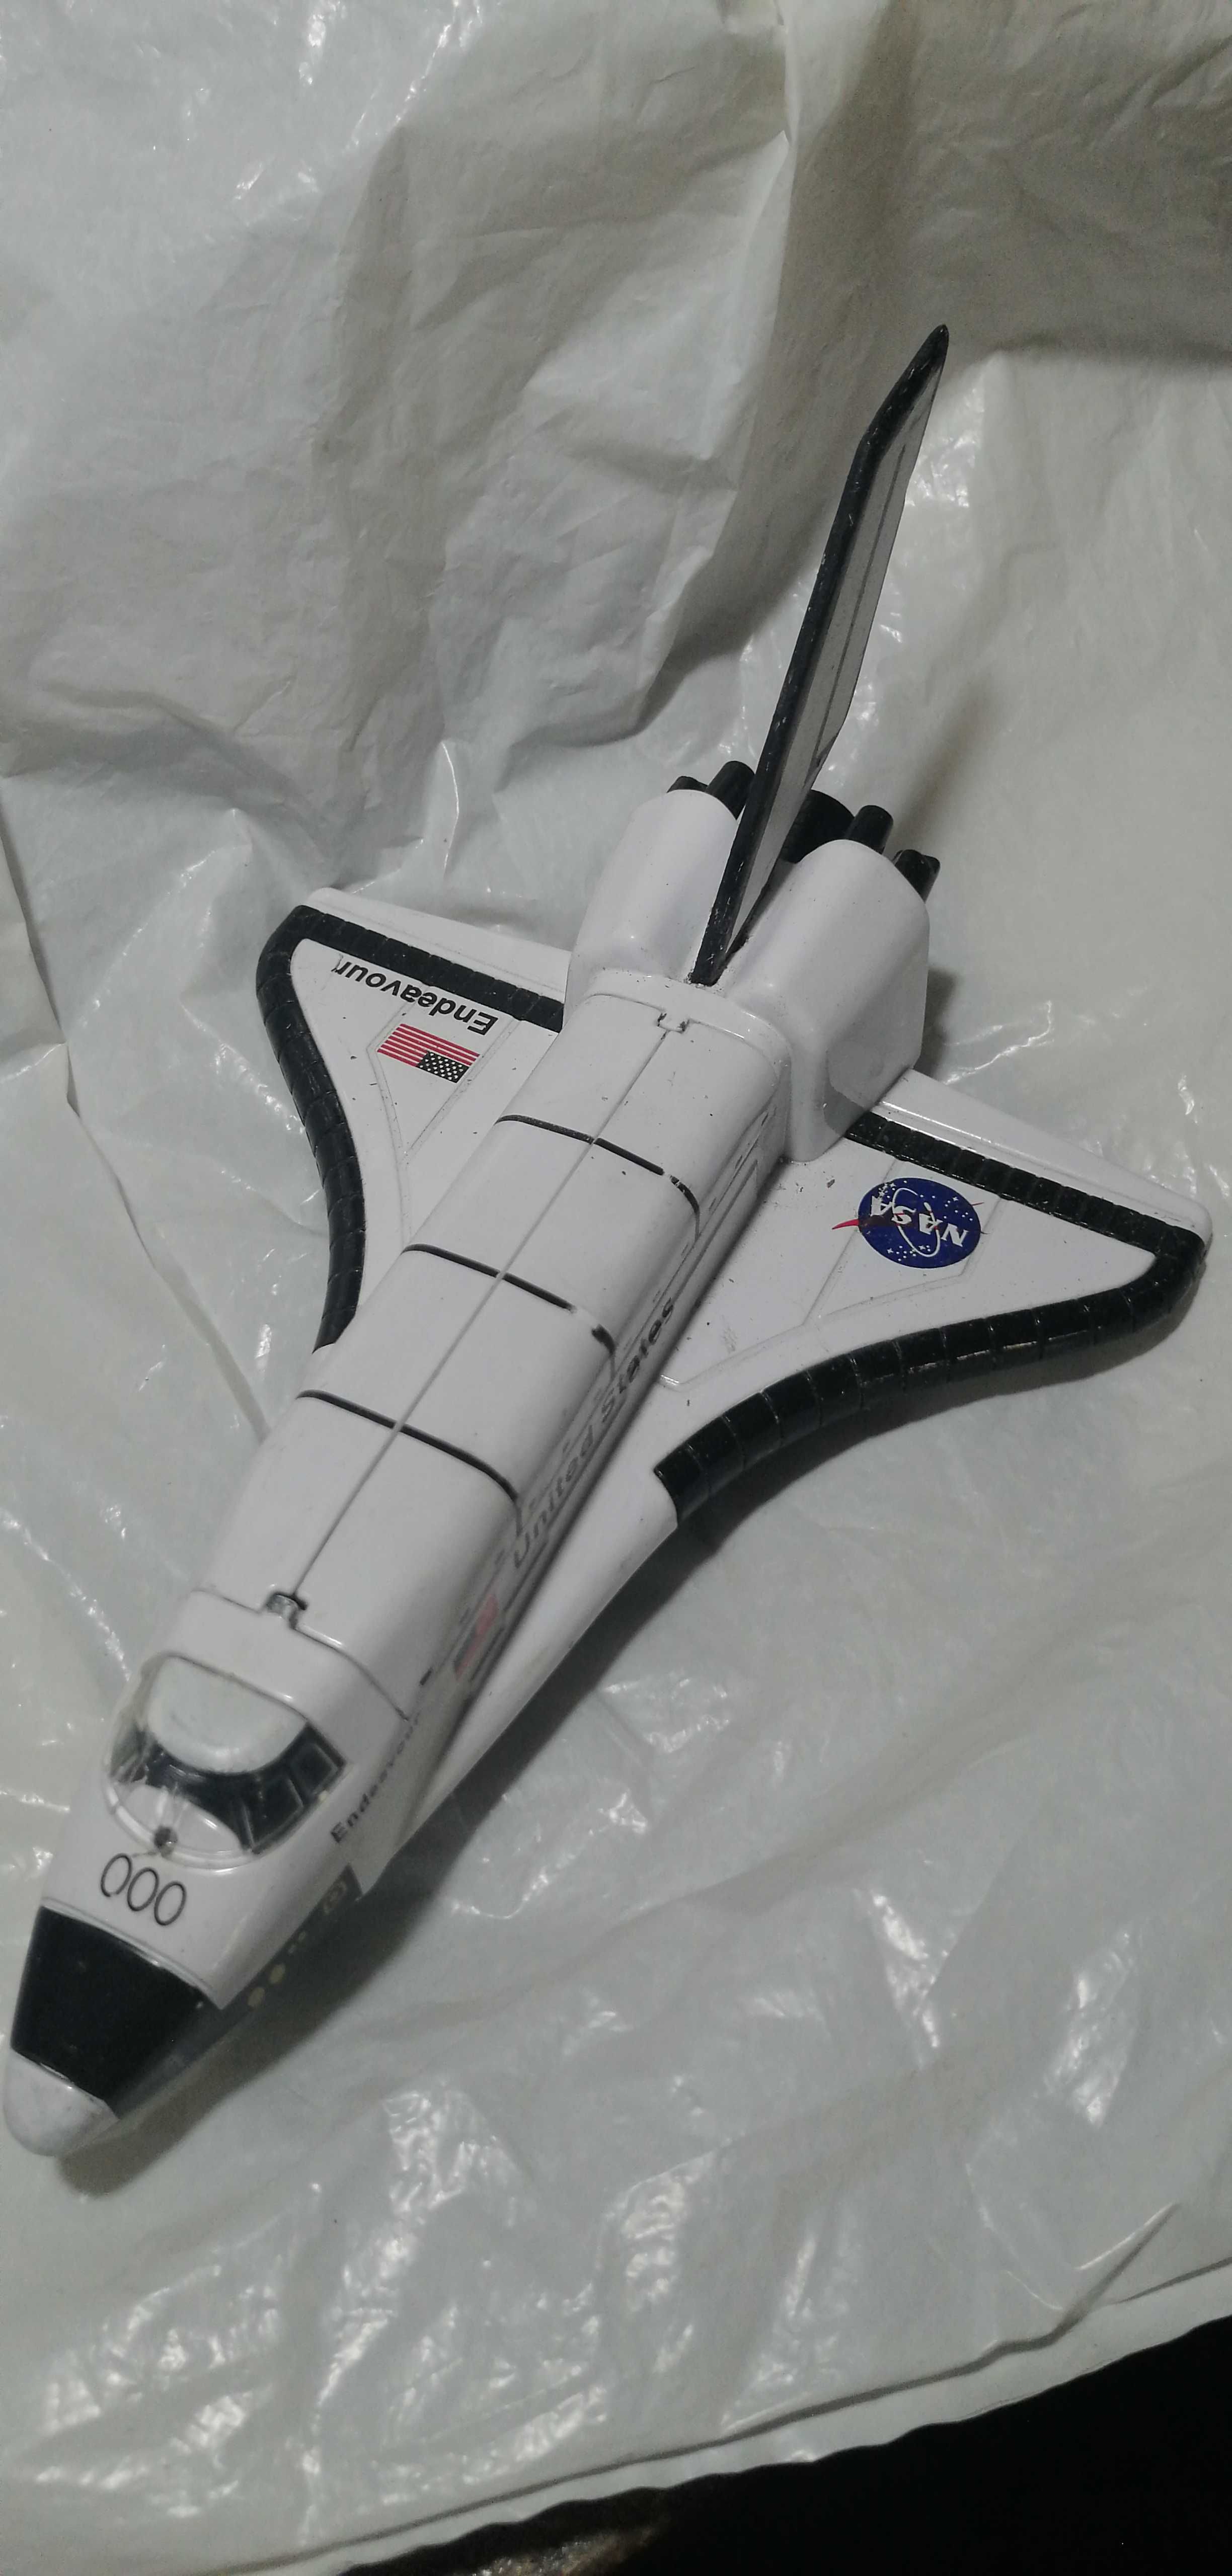 Space shuttle Endeavour / Nasa